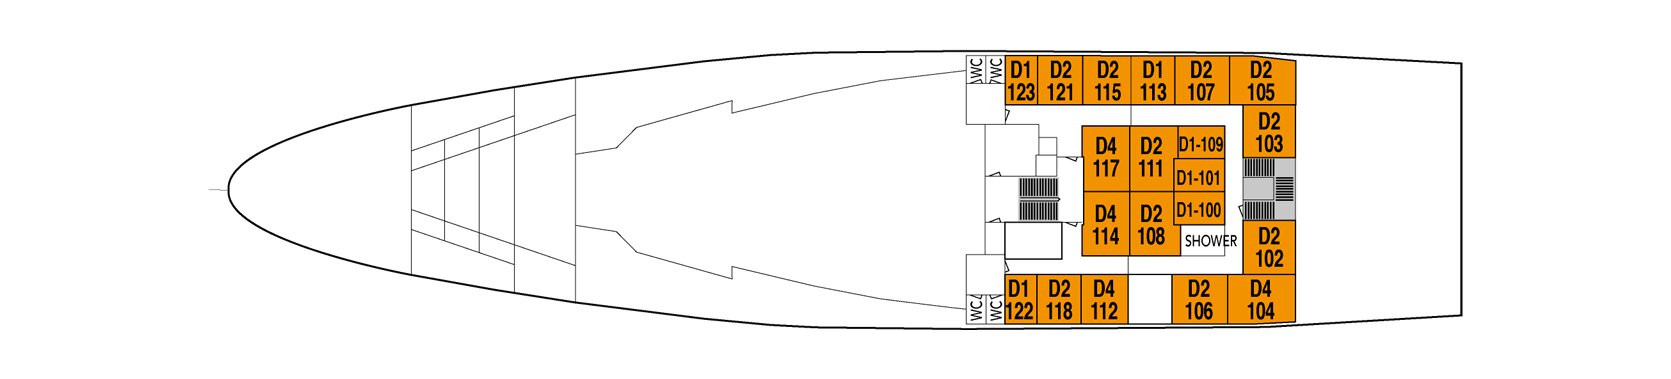 1548636369.5686_d268_Hurtigruten MS Lofoten Deck Plans Deck 5.png